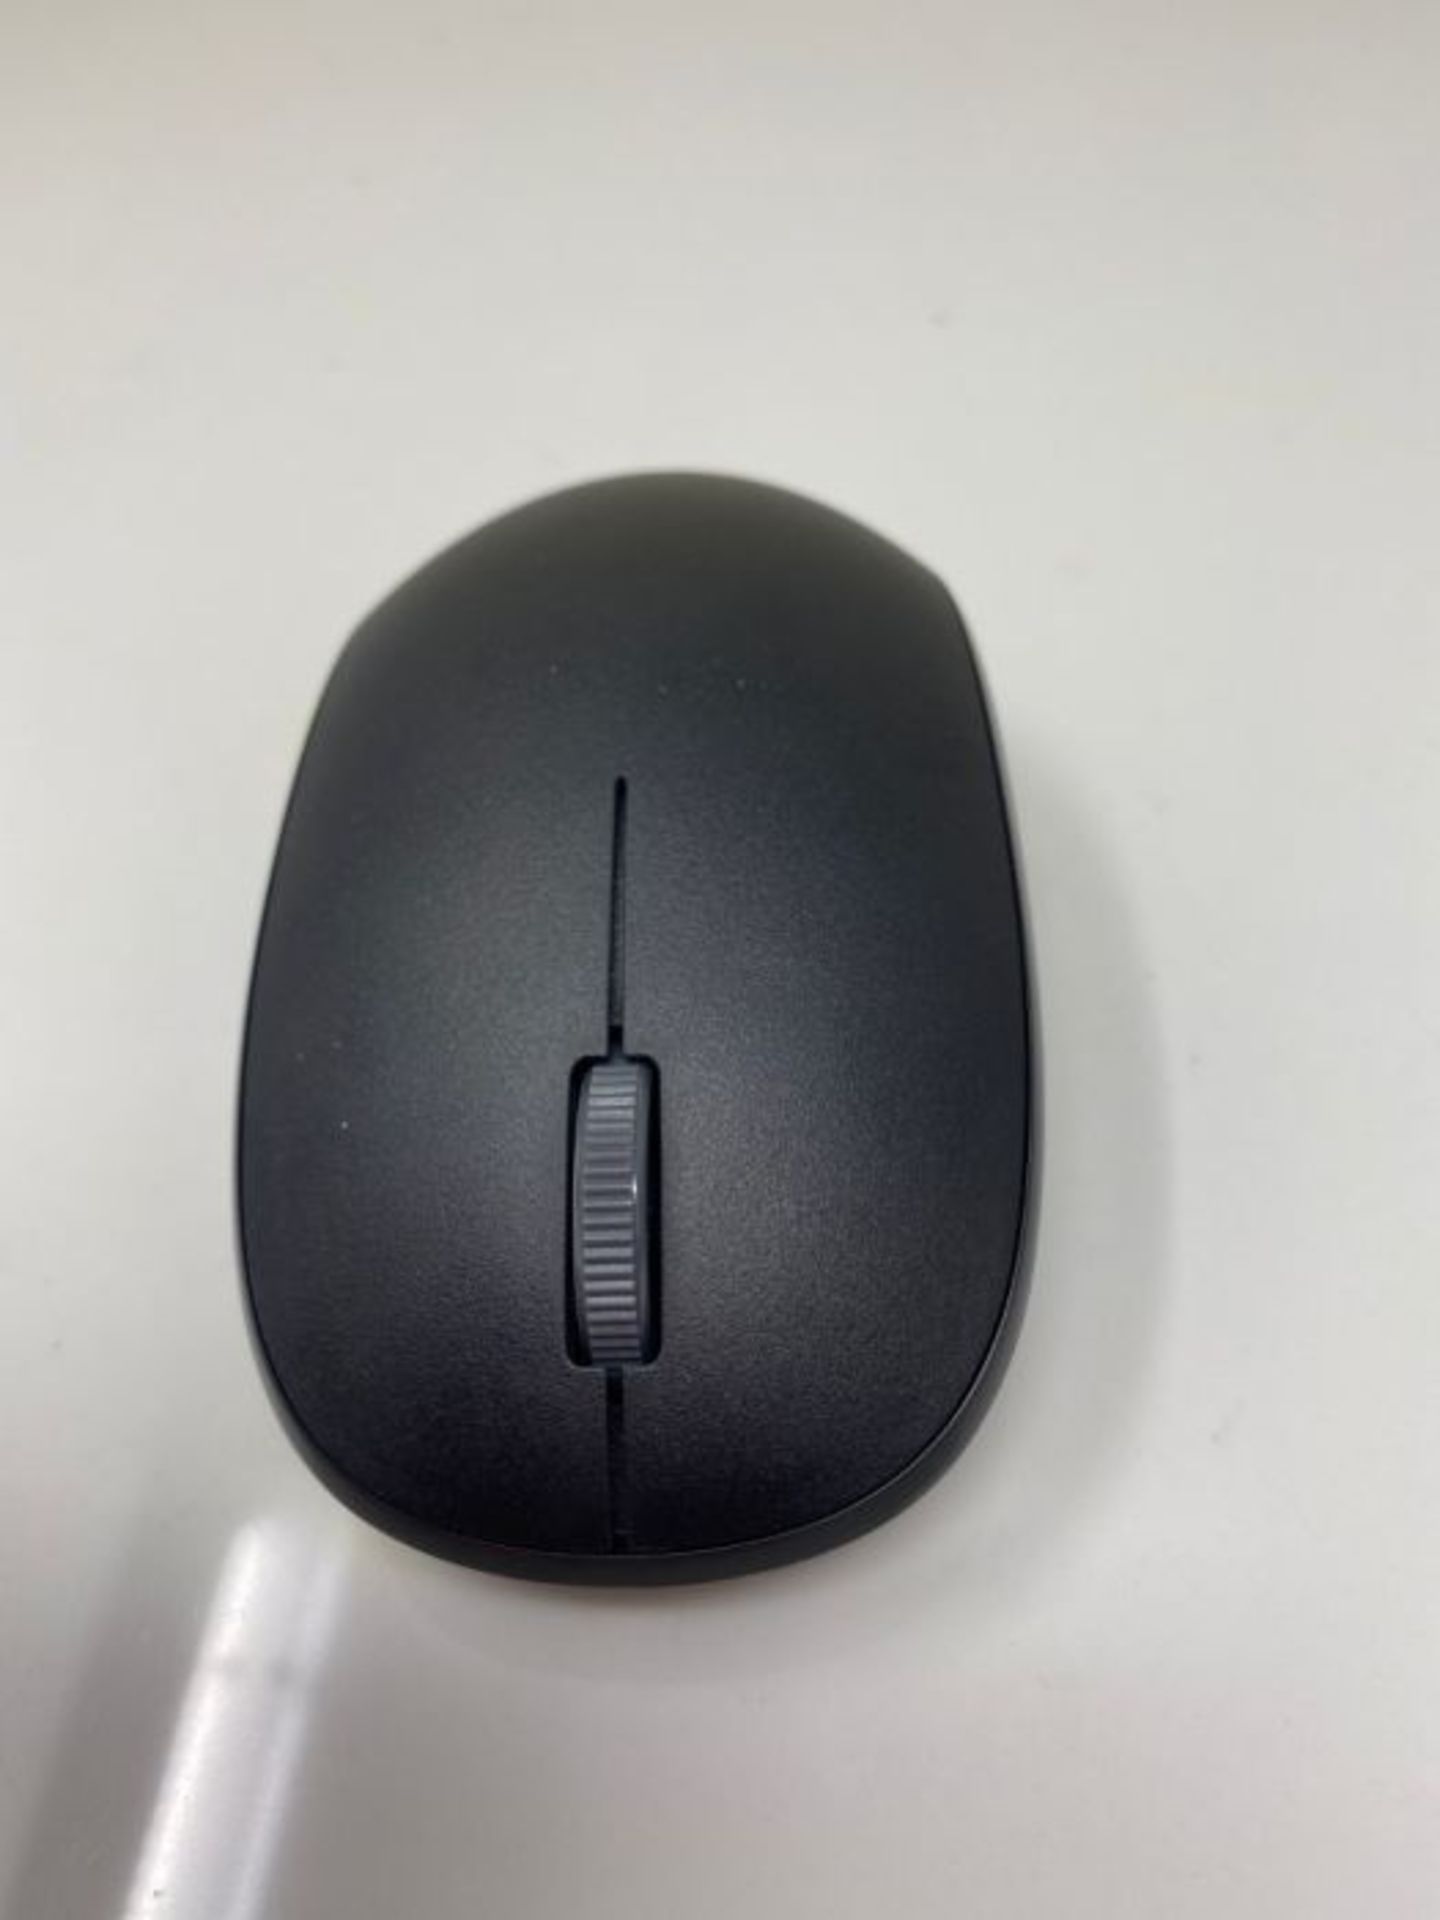 Microsoft Bluetooth Mouse - Black - Image 2 of 2